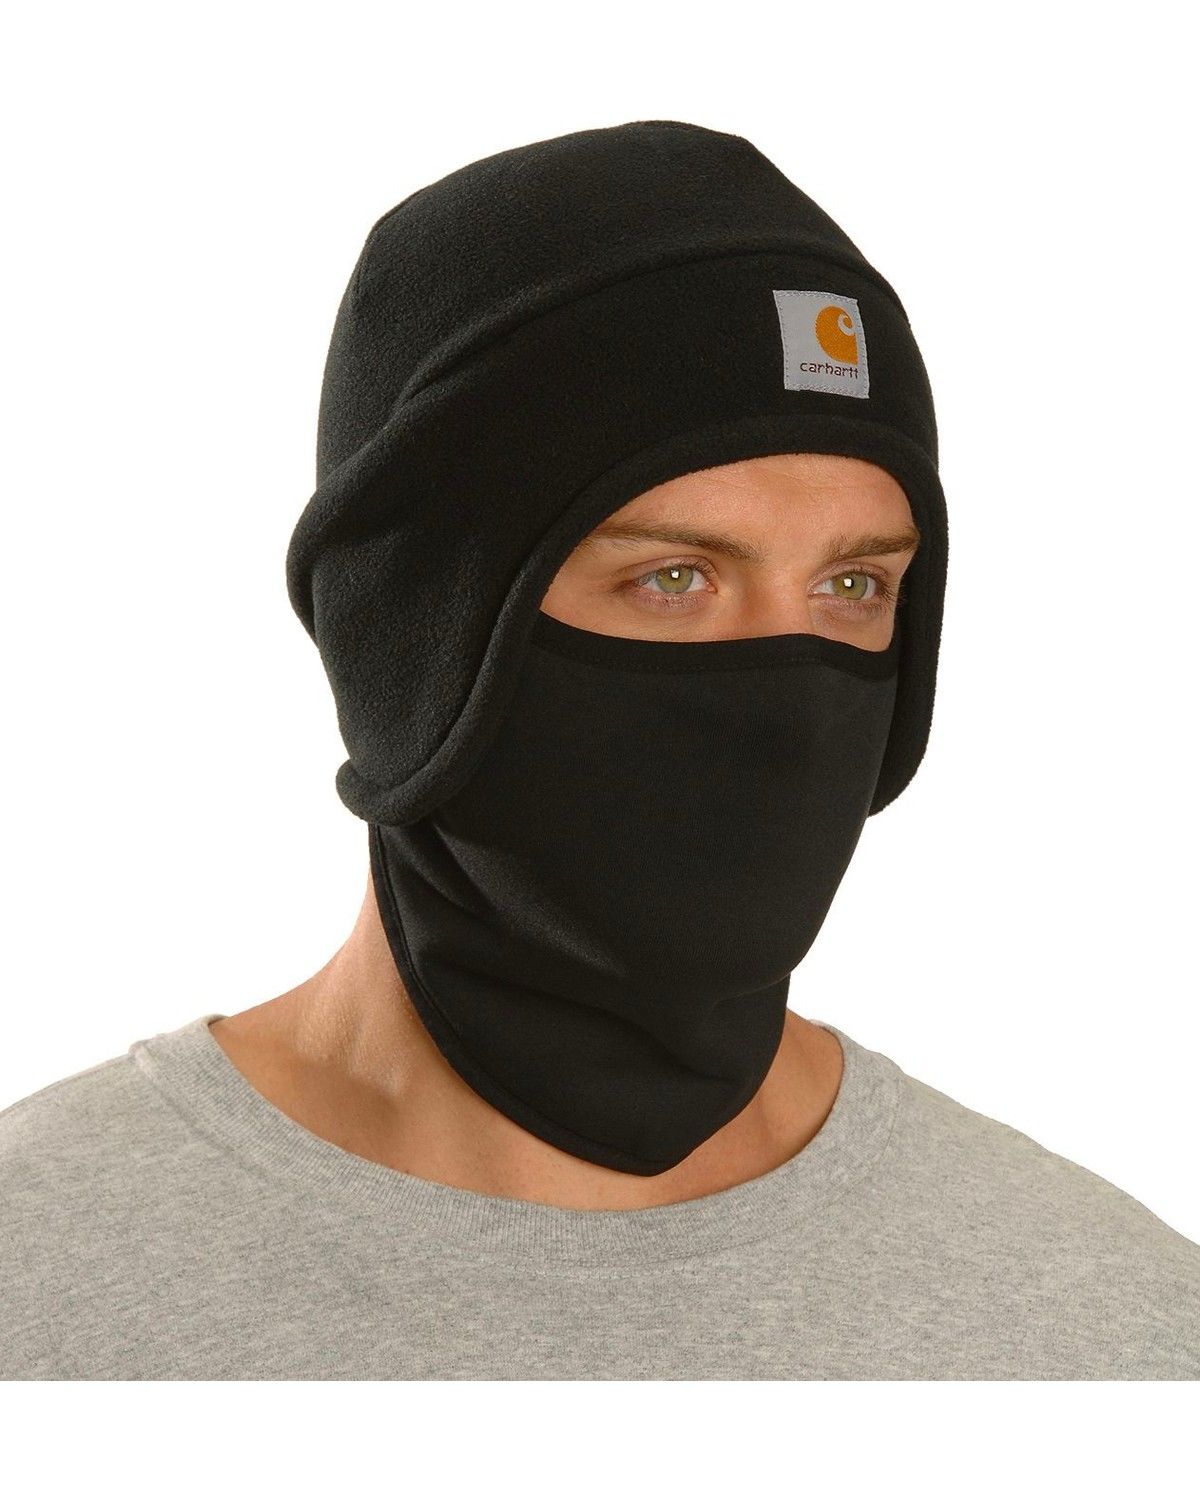 Carhartt Mens 2-in-1 Fleece Headwear, Black, hi-res